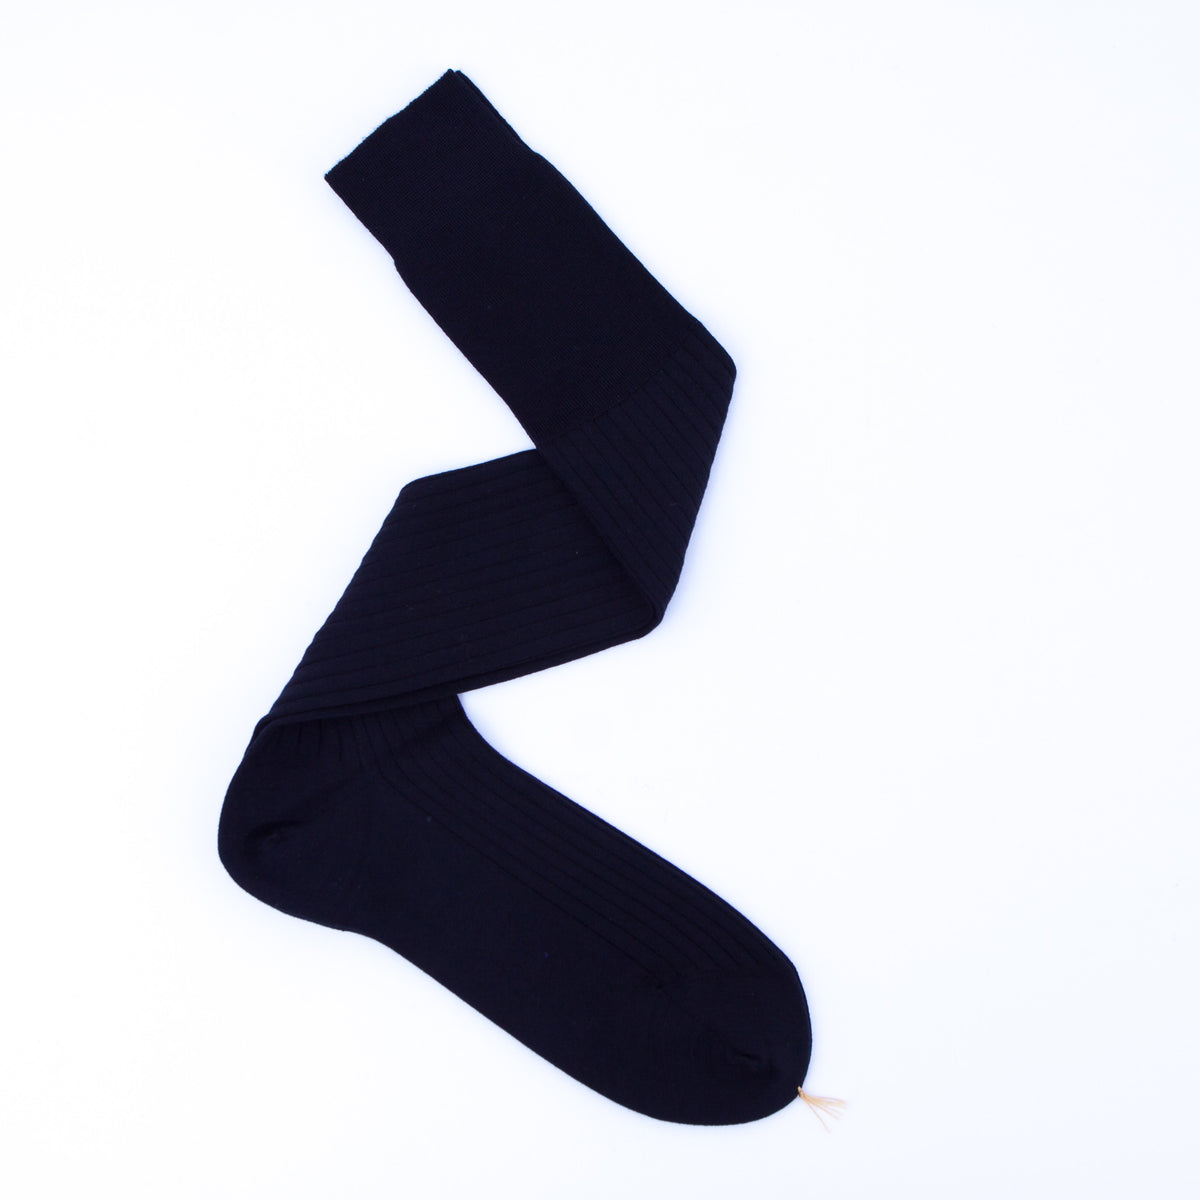 Black 100% Pure Cashmere Over-the-Calf Socks